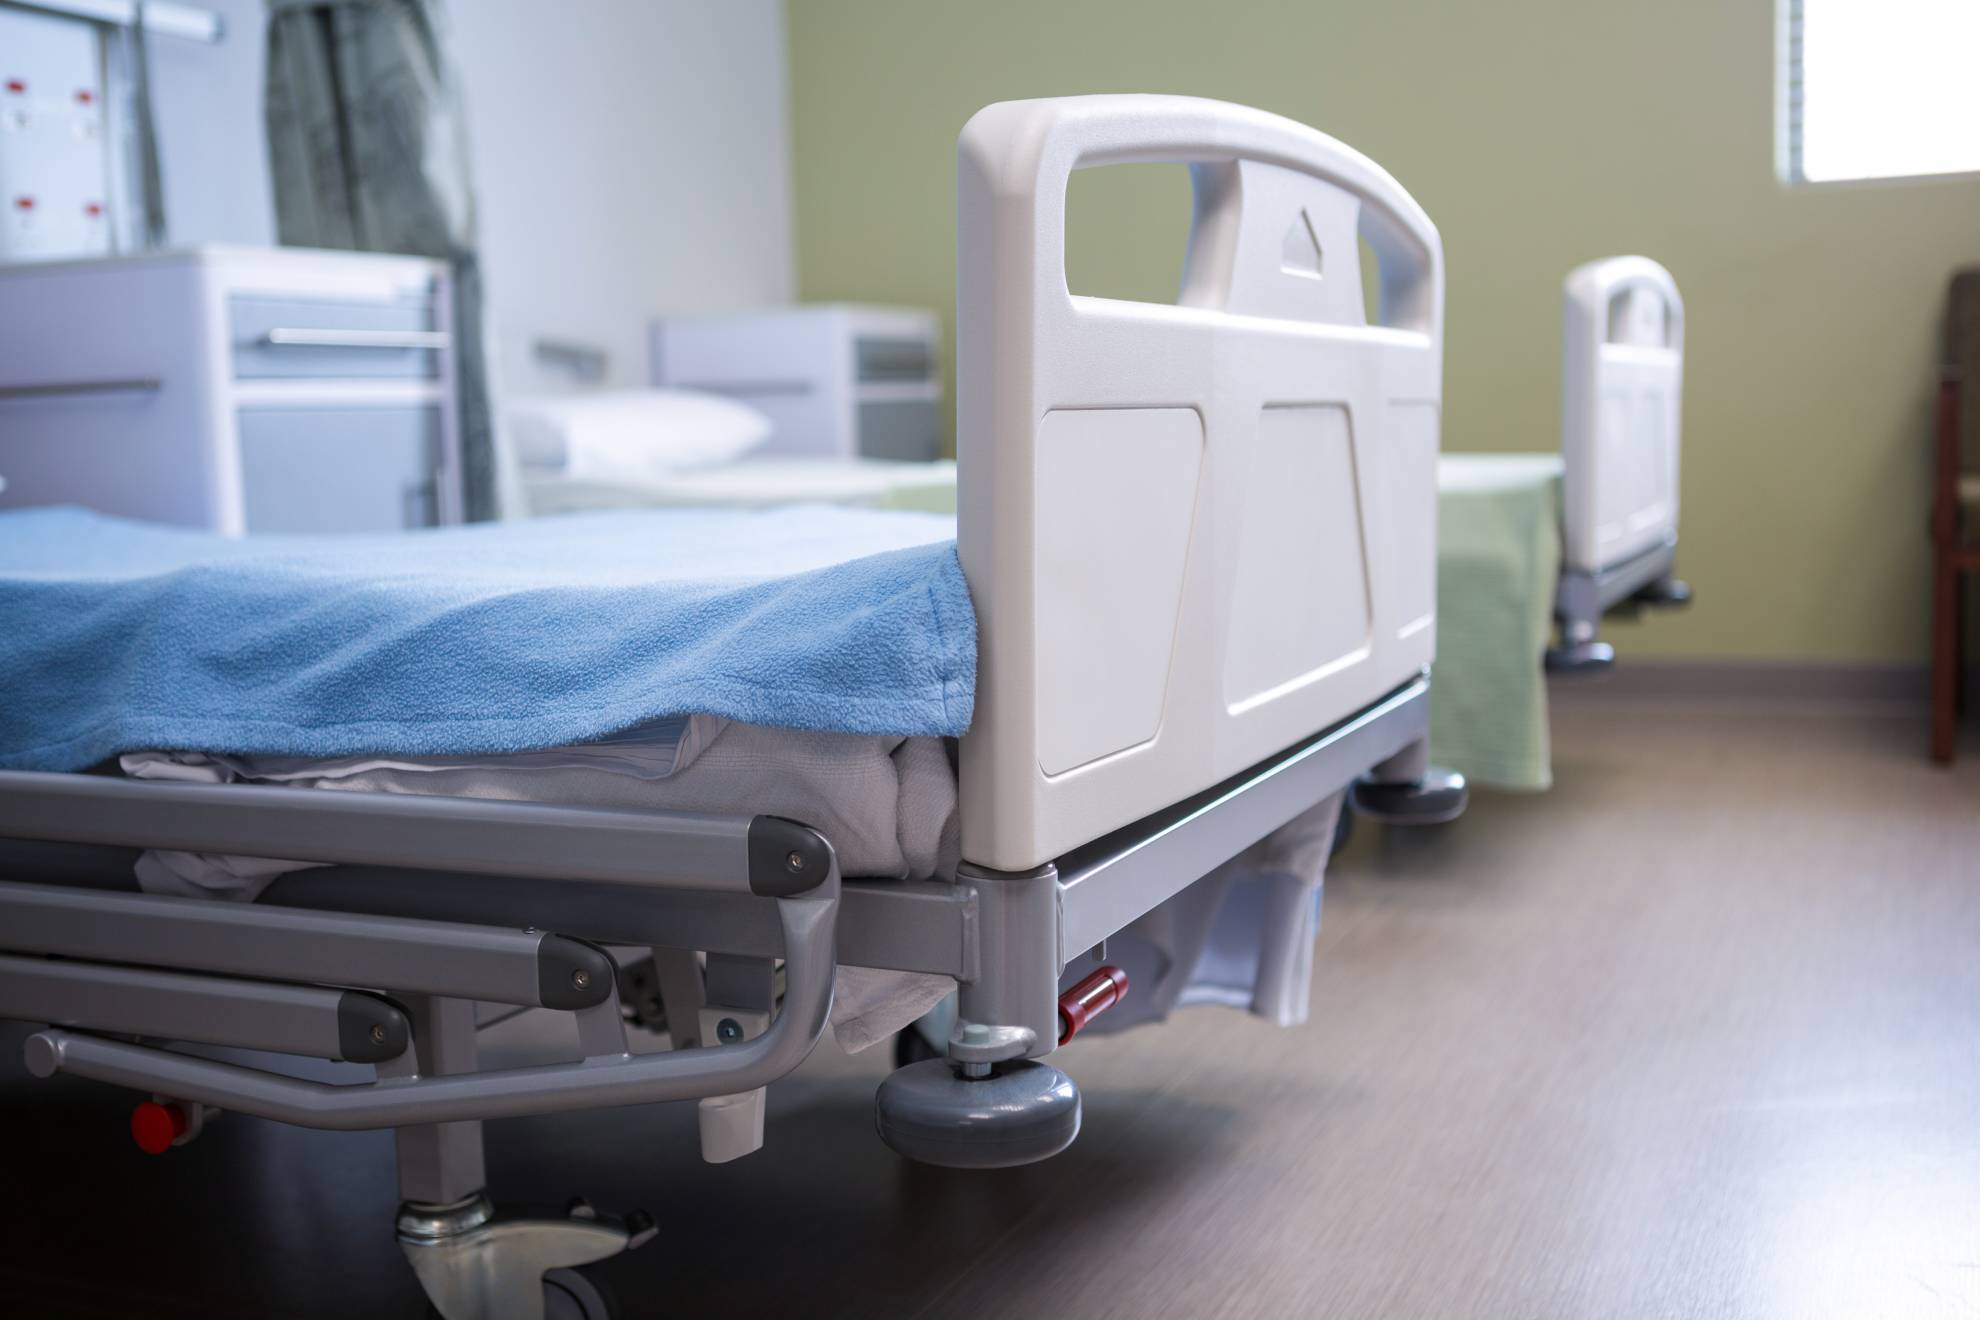 empty-beds-in-ward-at-hospital-2021-08-28-17-23-58-utc (1)